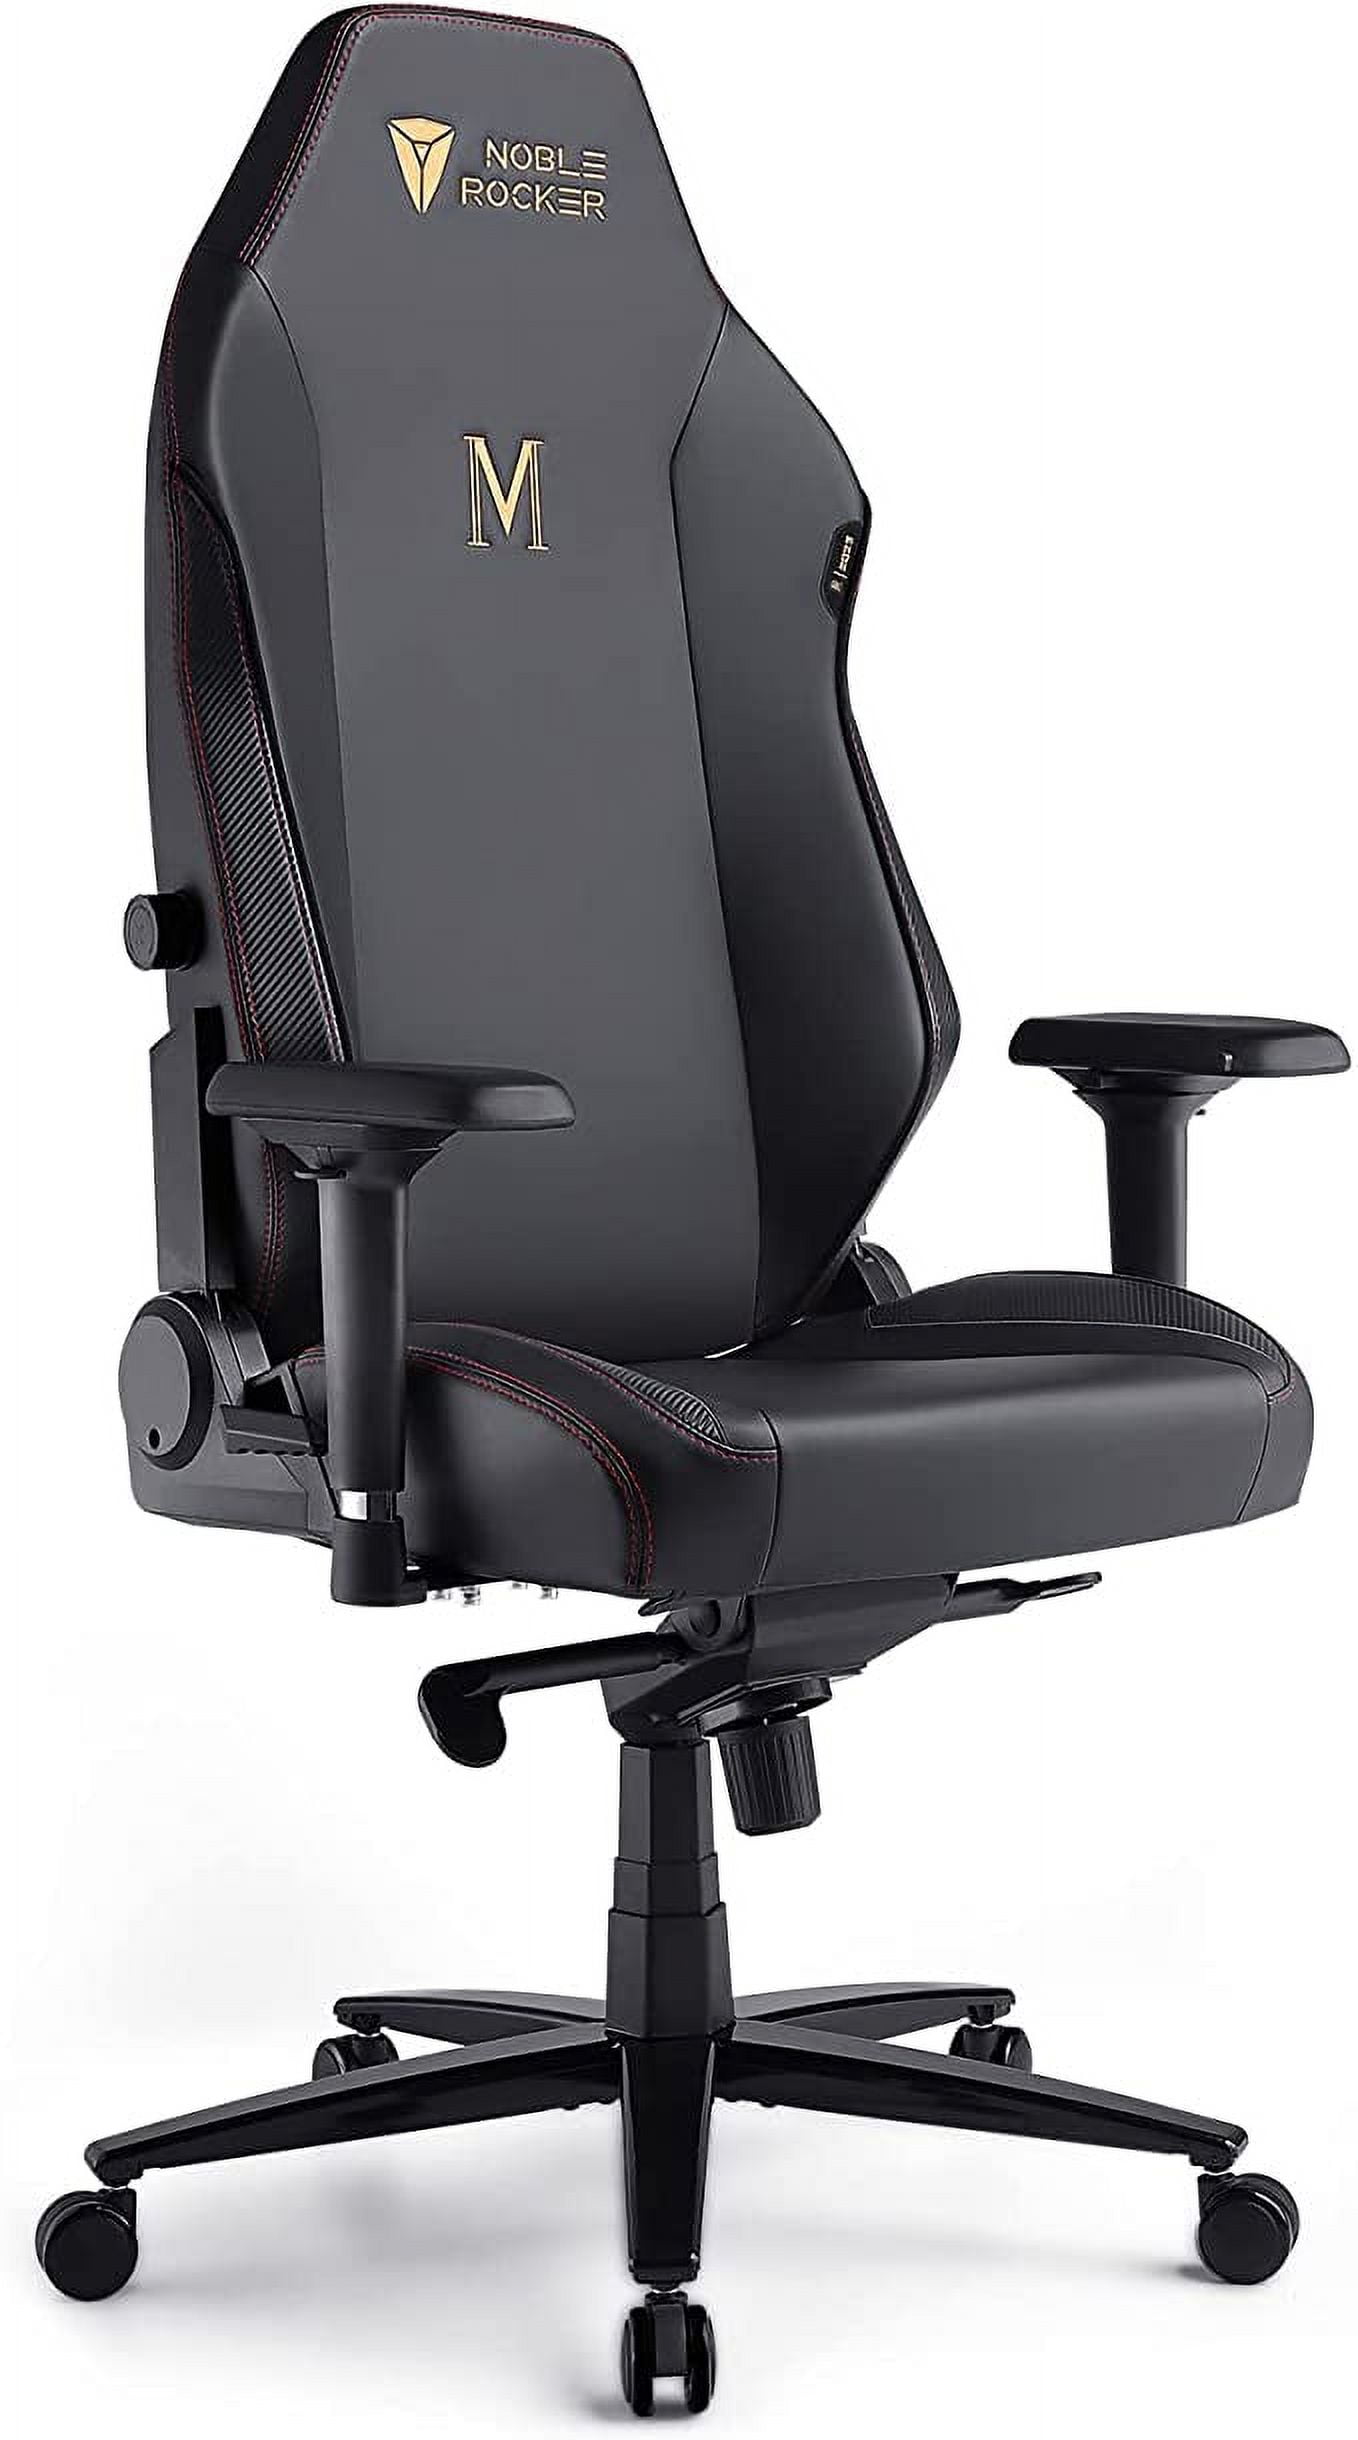 Norn, Ergonomic Gaming Chair